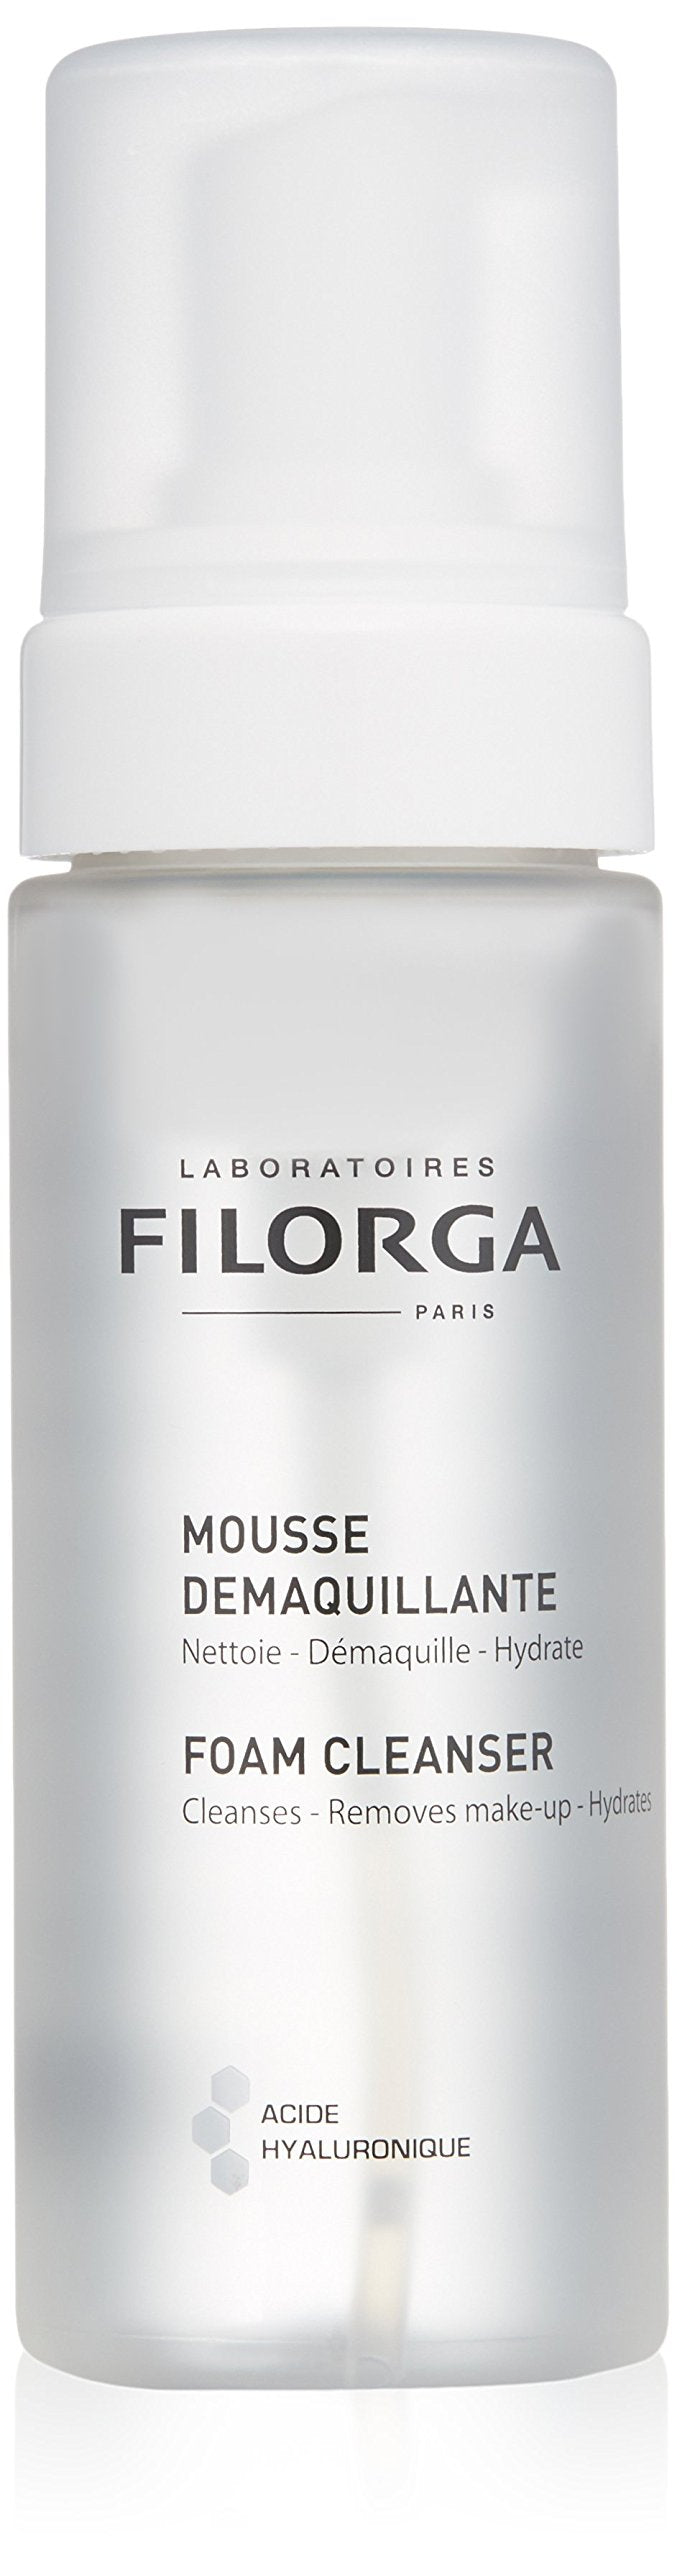 Laboratoires Filorga Paris 3-in-1 Foam Cleanser, 5 fl. oz.